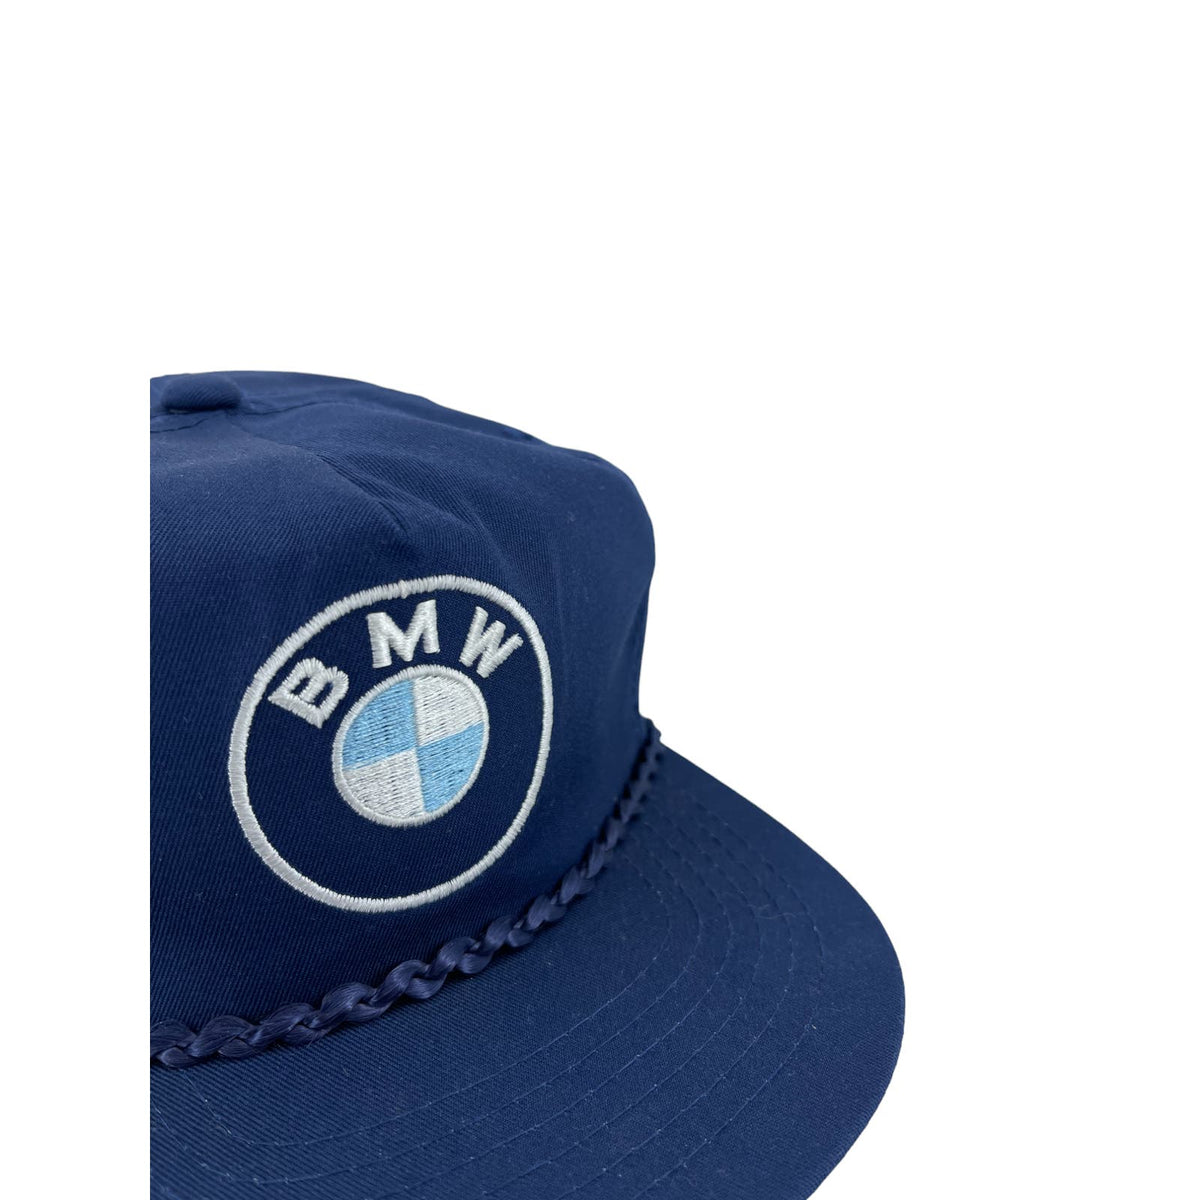 Vintage 1990's BMW Motorsports Racing YA Embroidered Snapback Hat